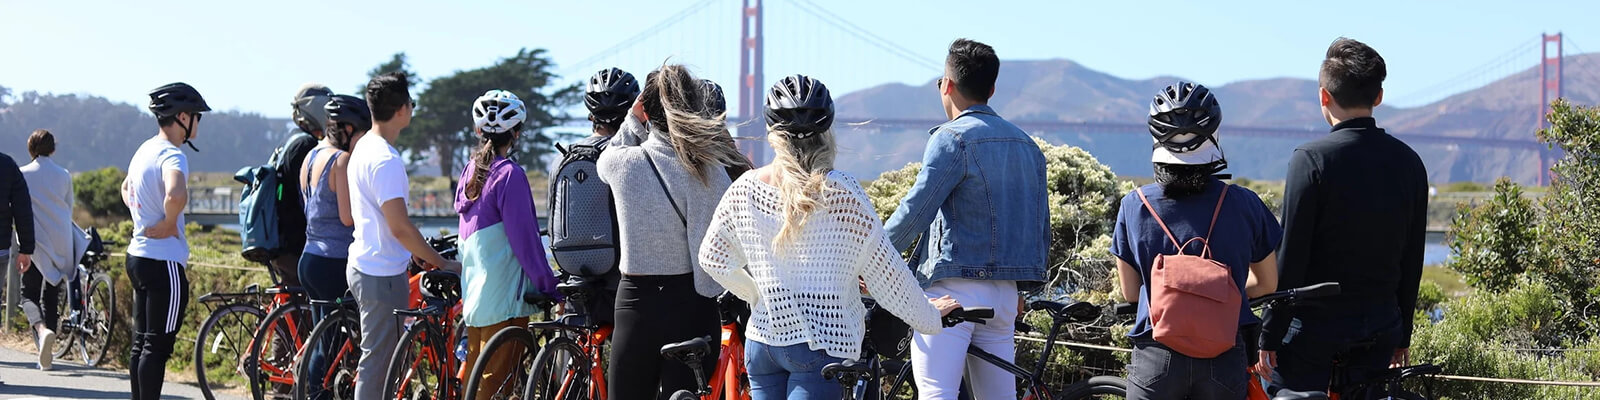 Golden Gate Bridge Bike Tour Coupons